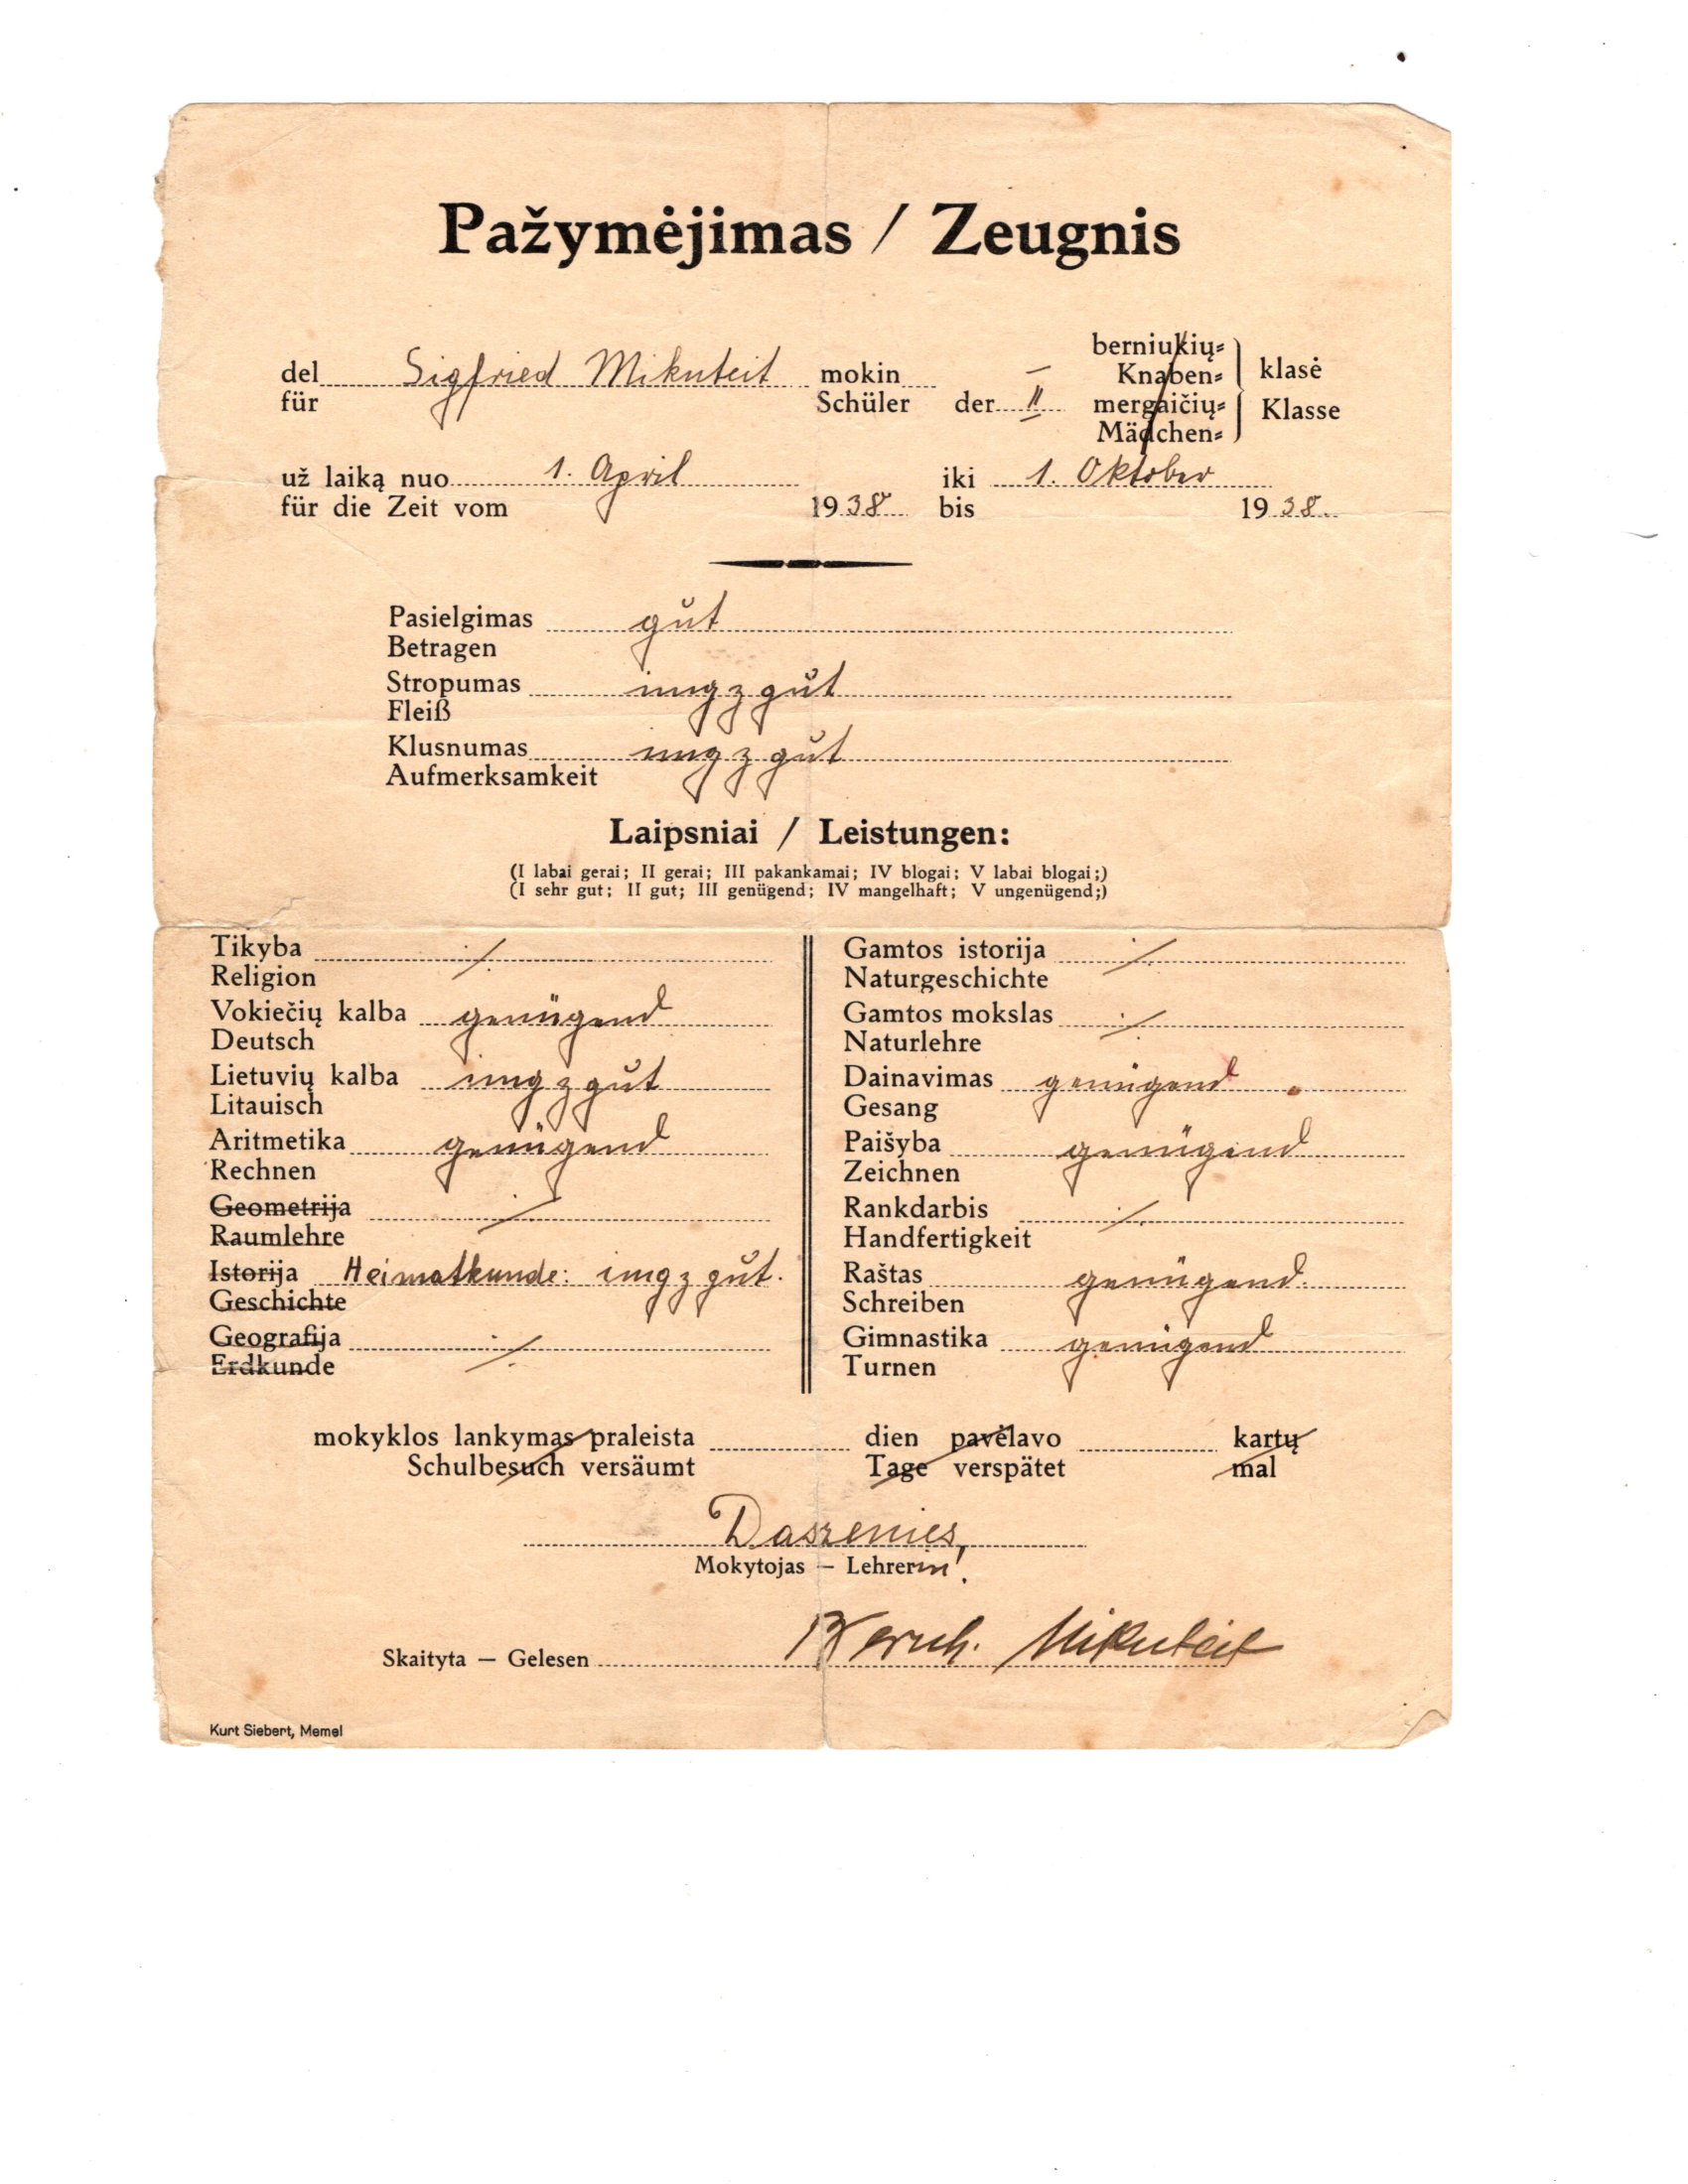 report card 1938